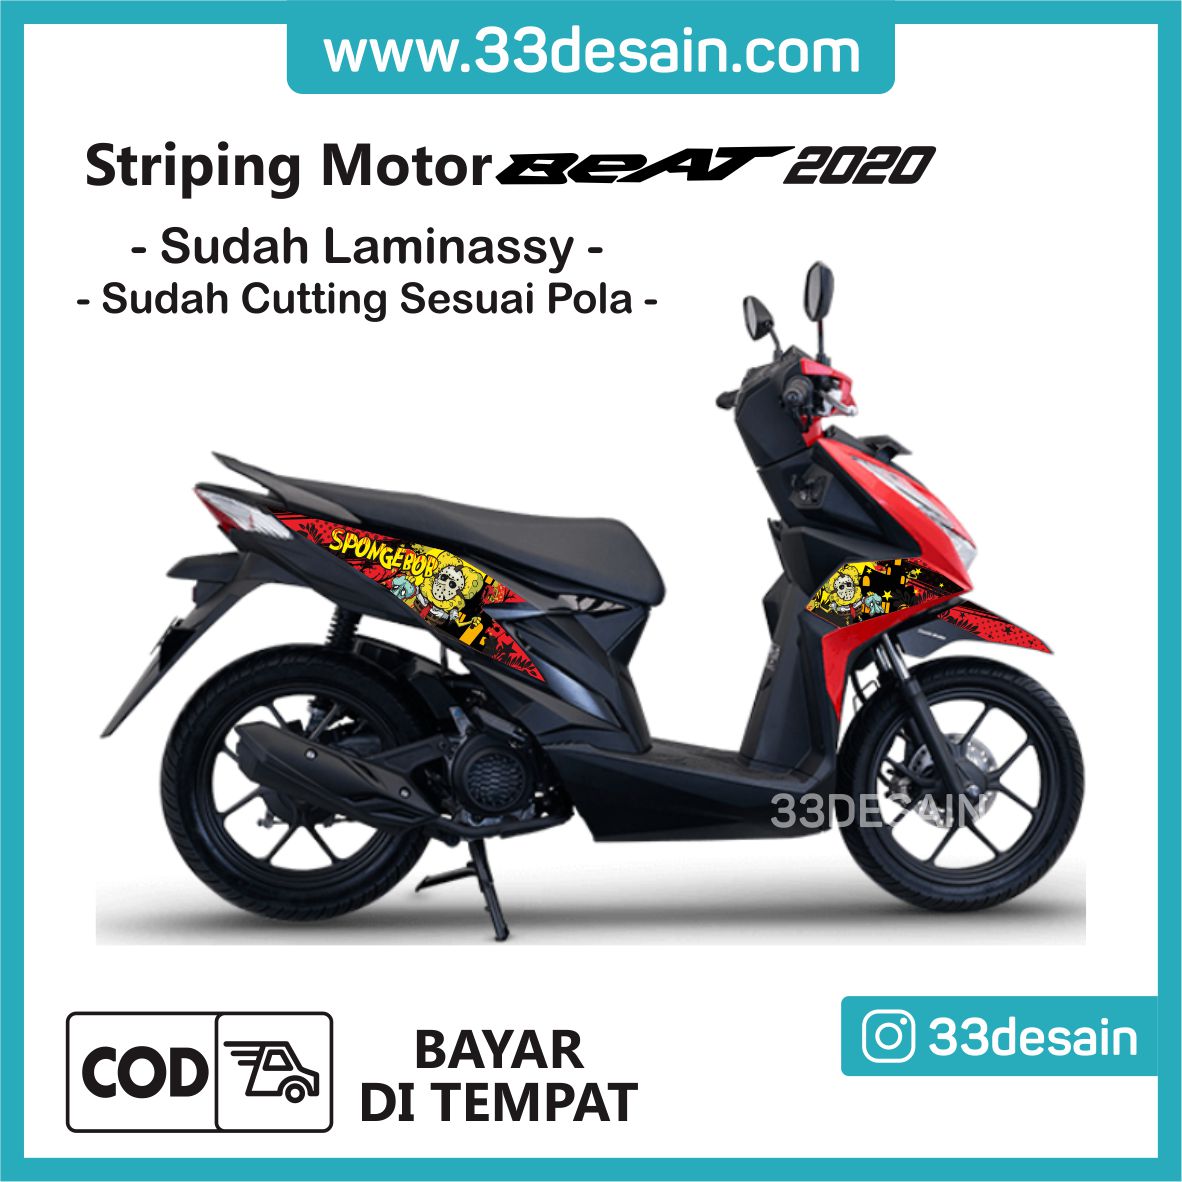 Aksesoris Stiker Motor Sticker Striping Motor Beat Esp 2020 8 Spongebob 33Desain Lazada Indonesia